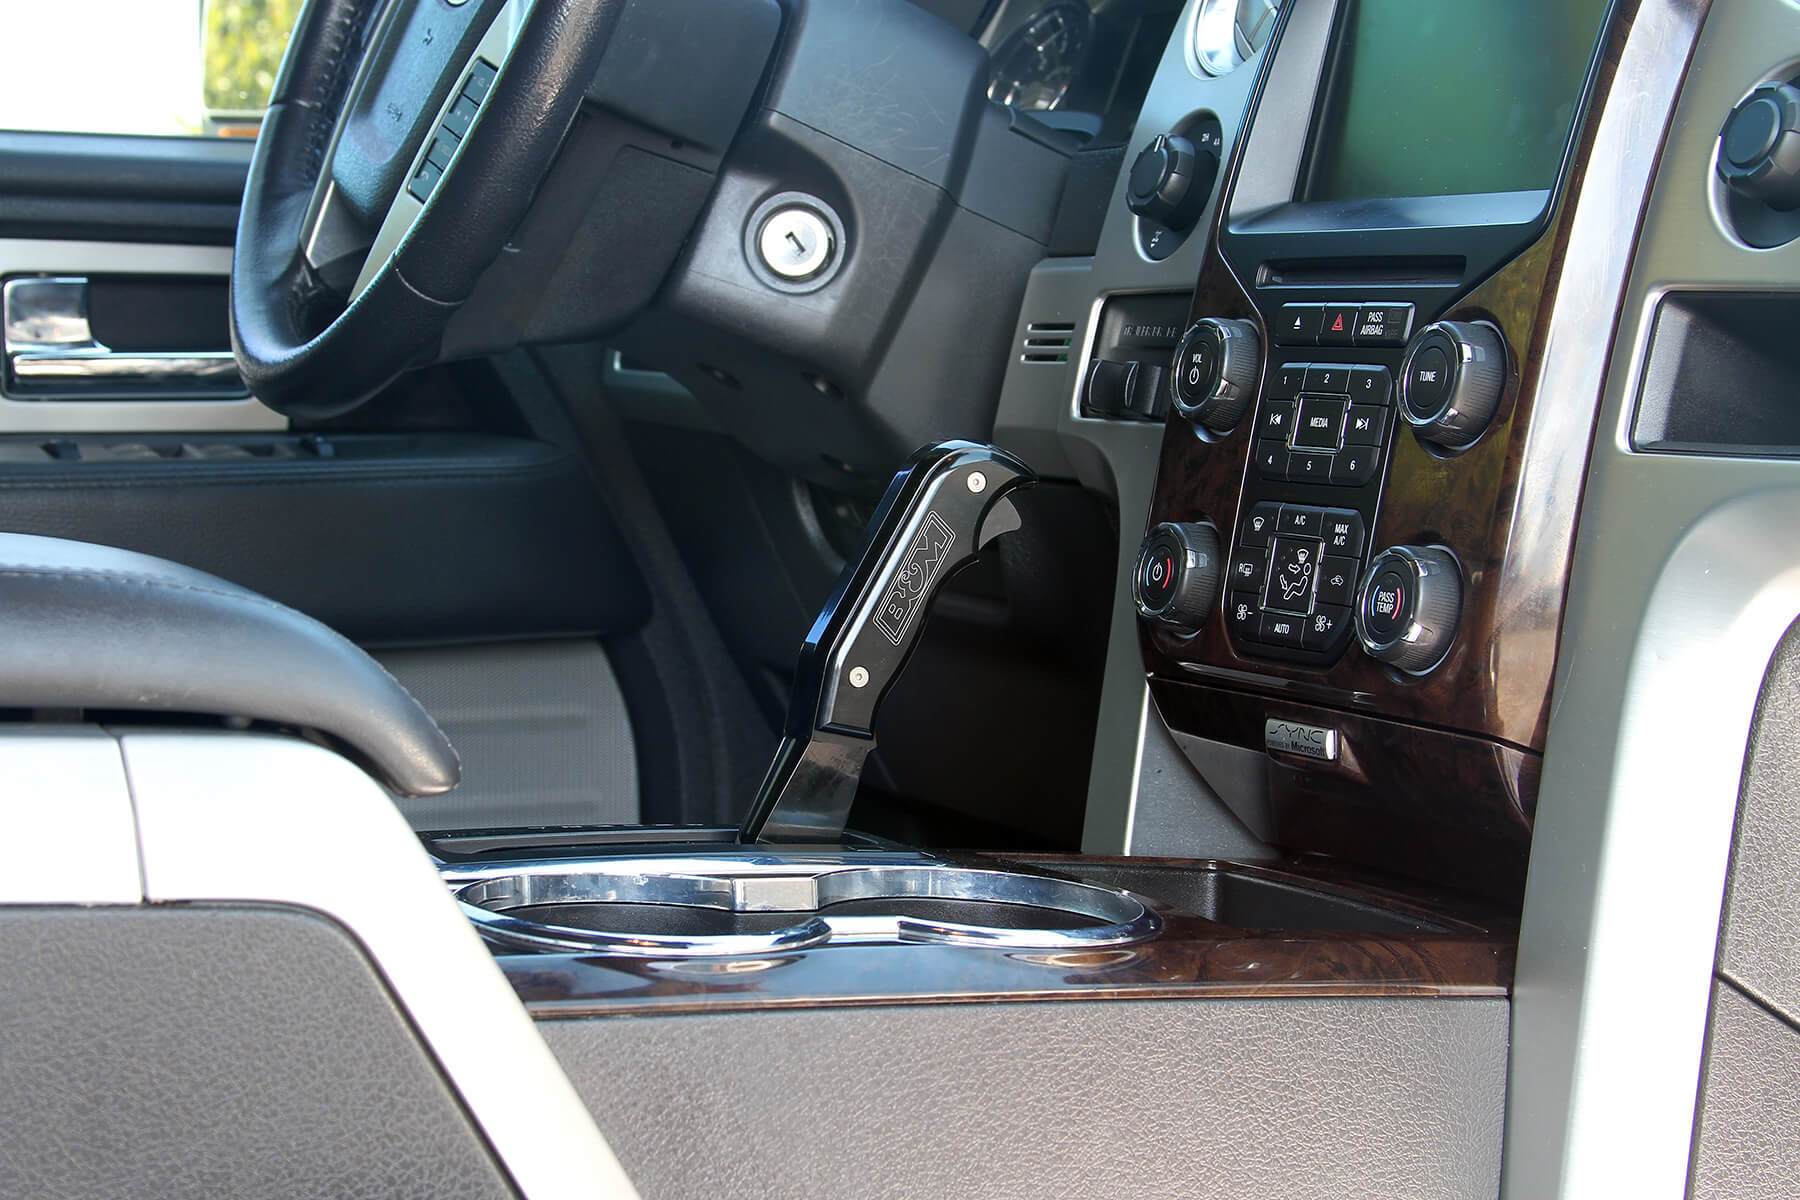 '11-14 Ford Raptor Magnum Grip Auto Shift Handle Interior Accessoires B&M display